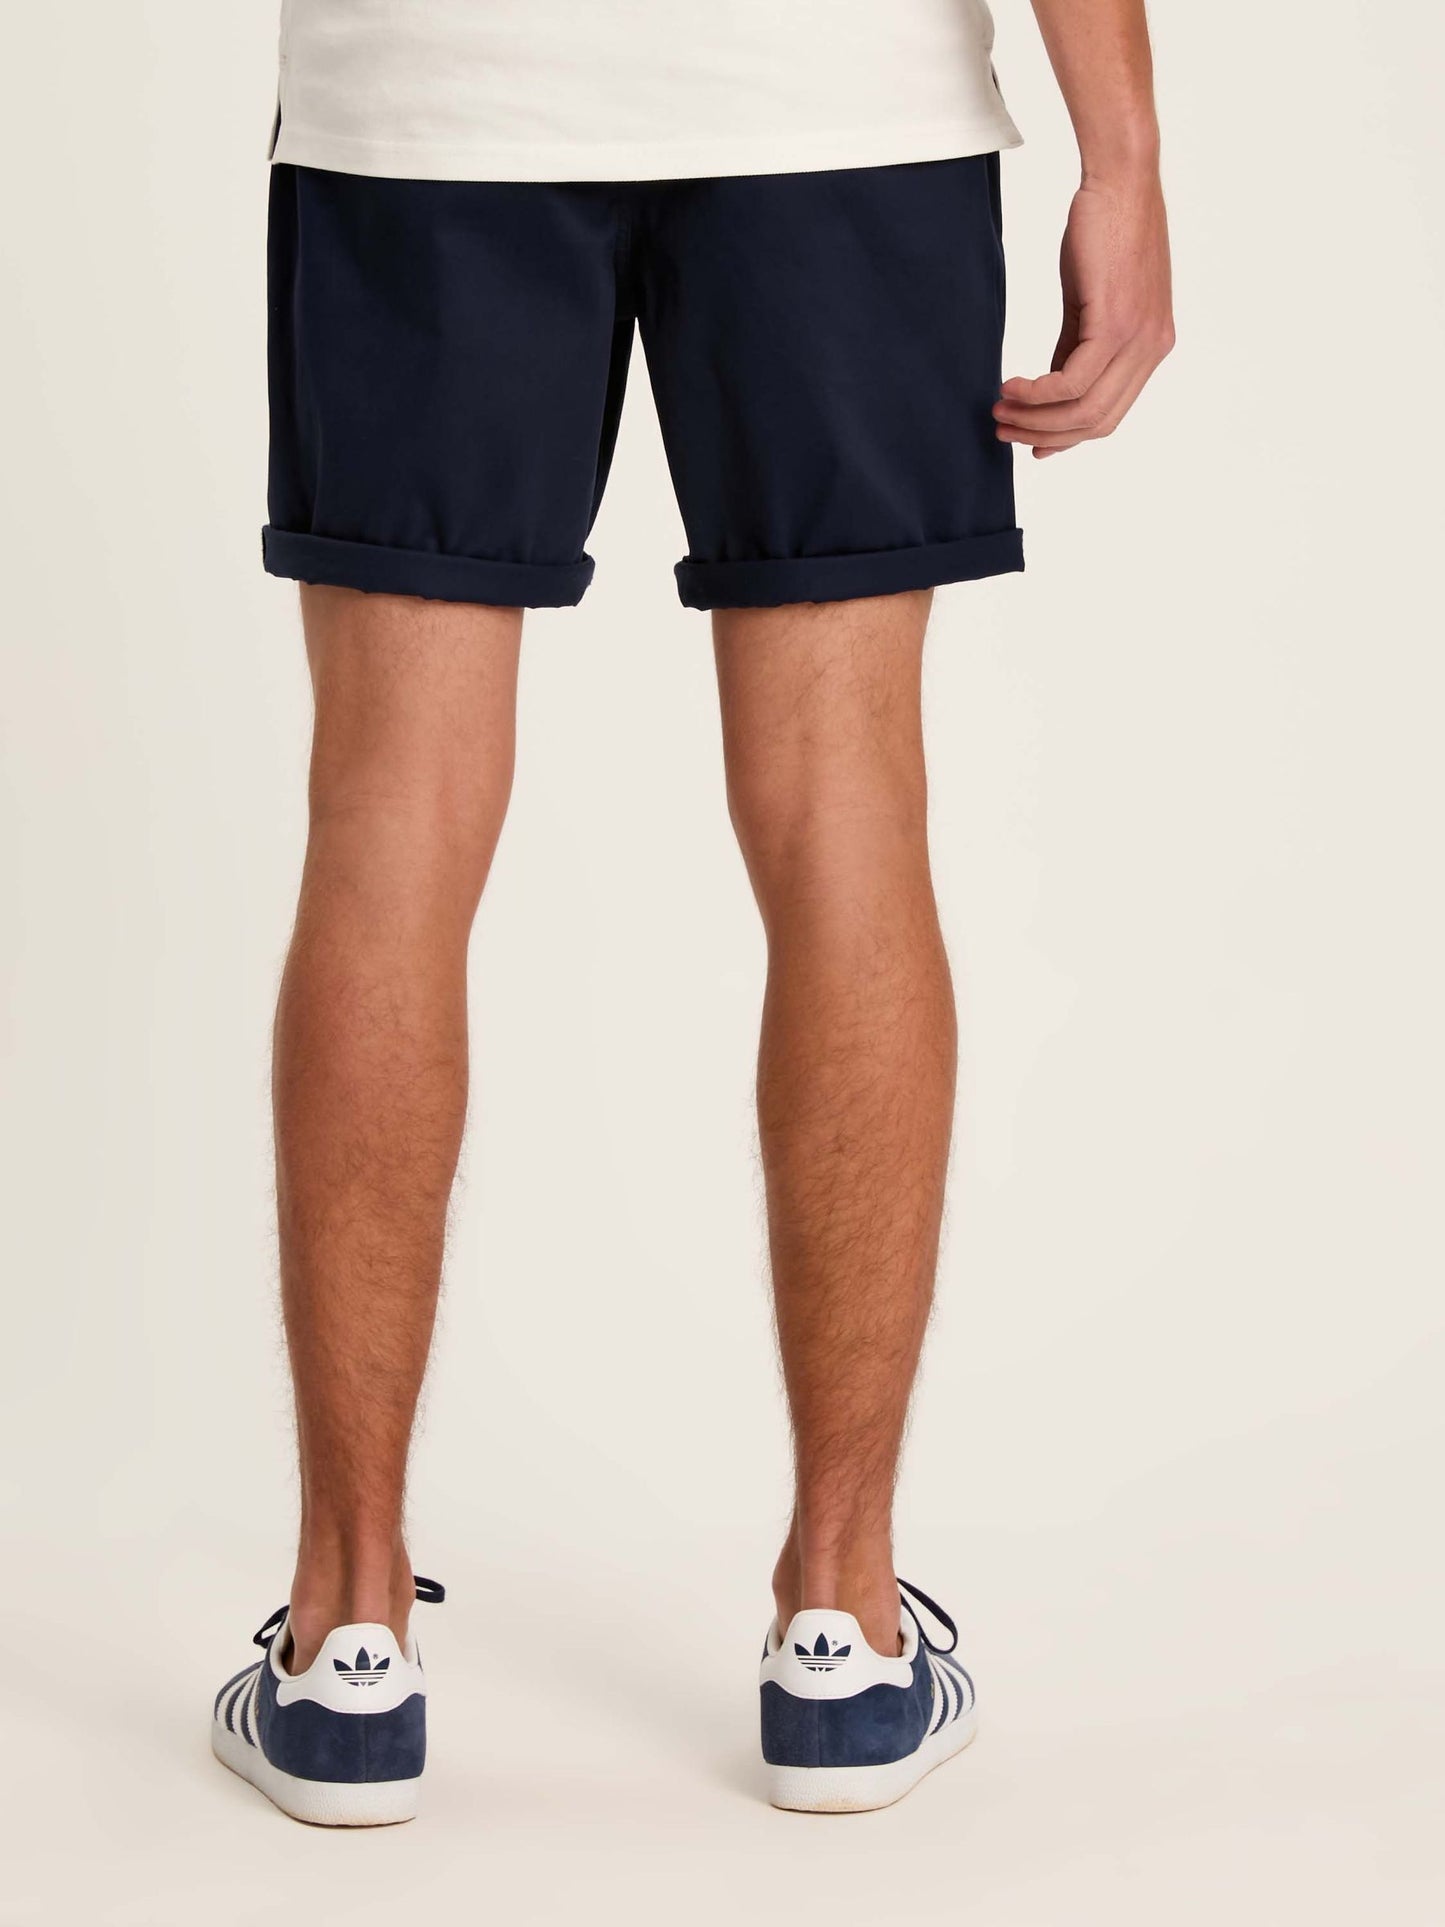 Joules Men's Chino Shorts